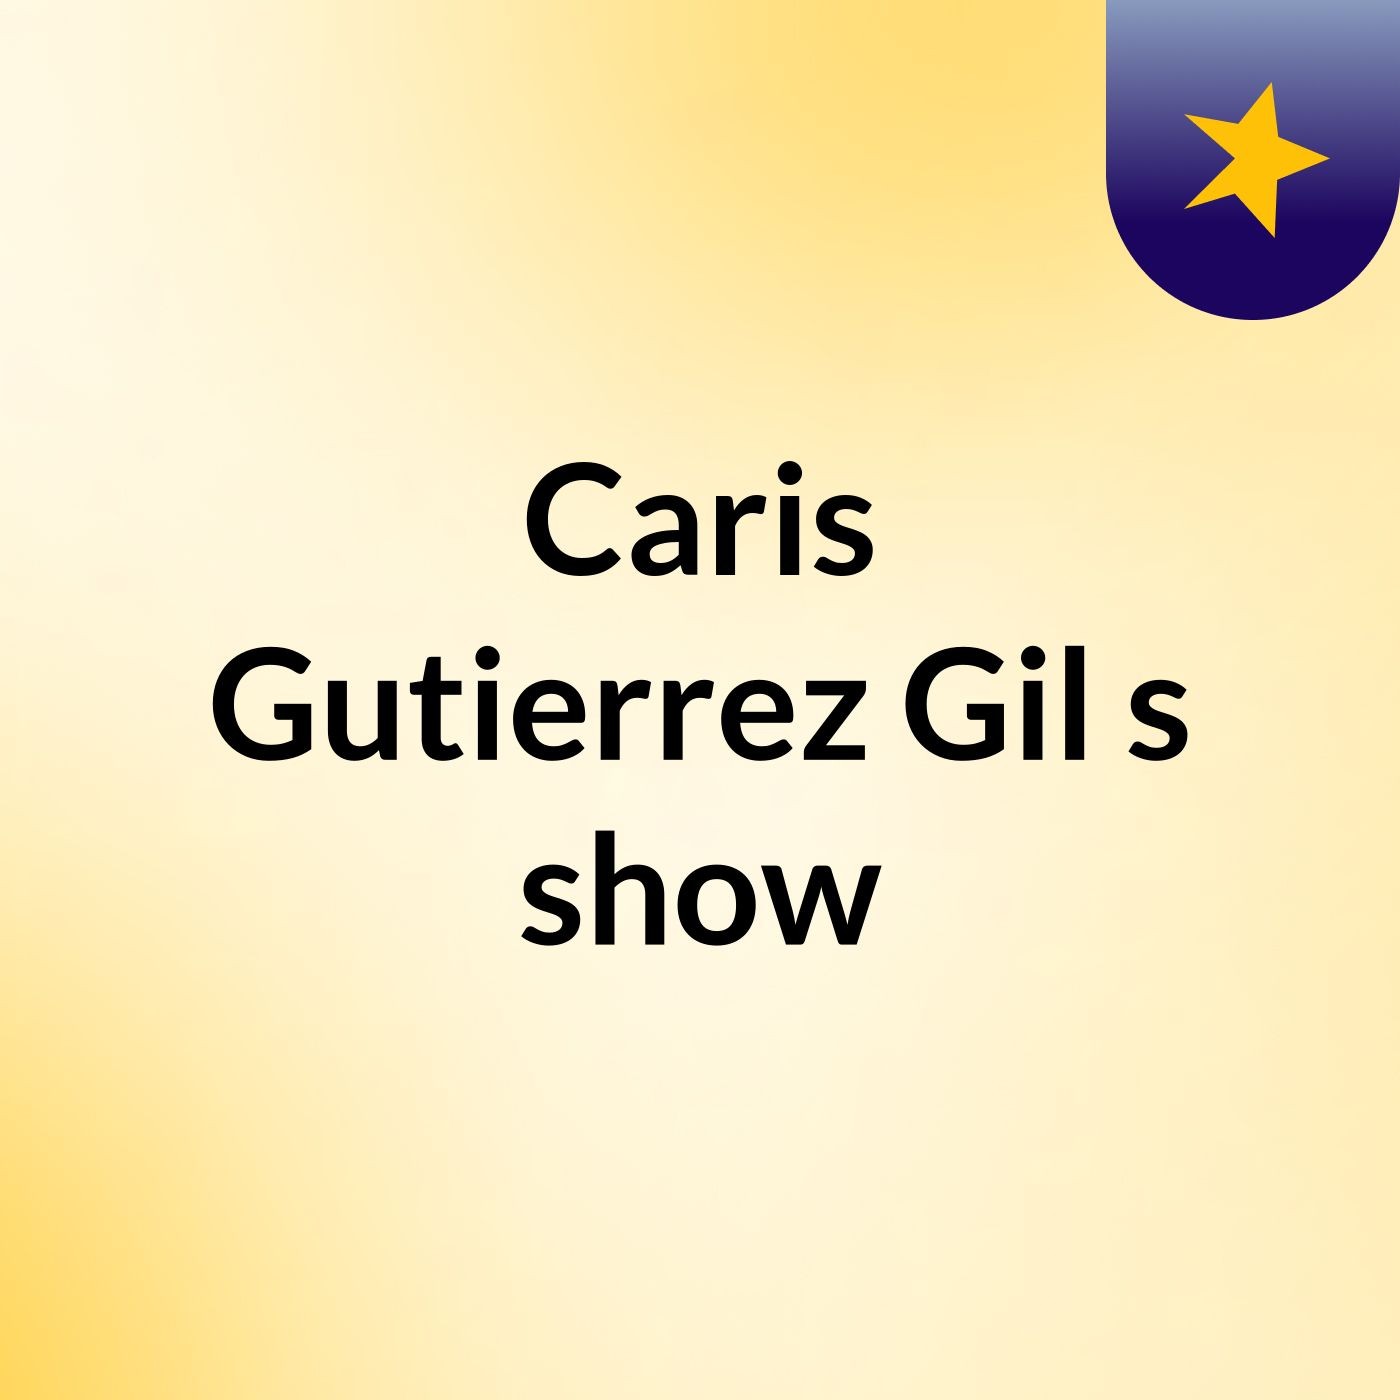 Caris Gutierrez Gil's show